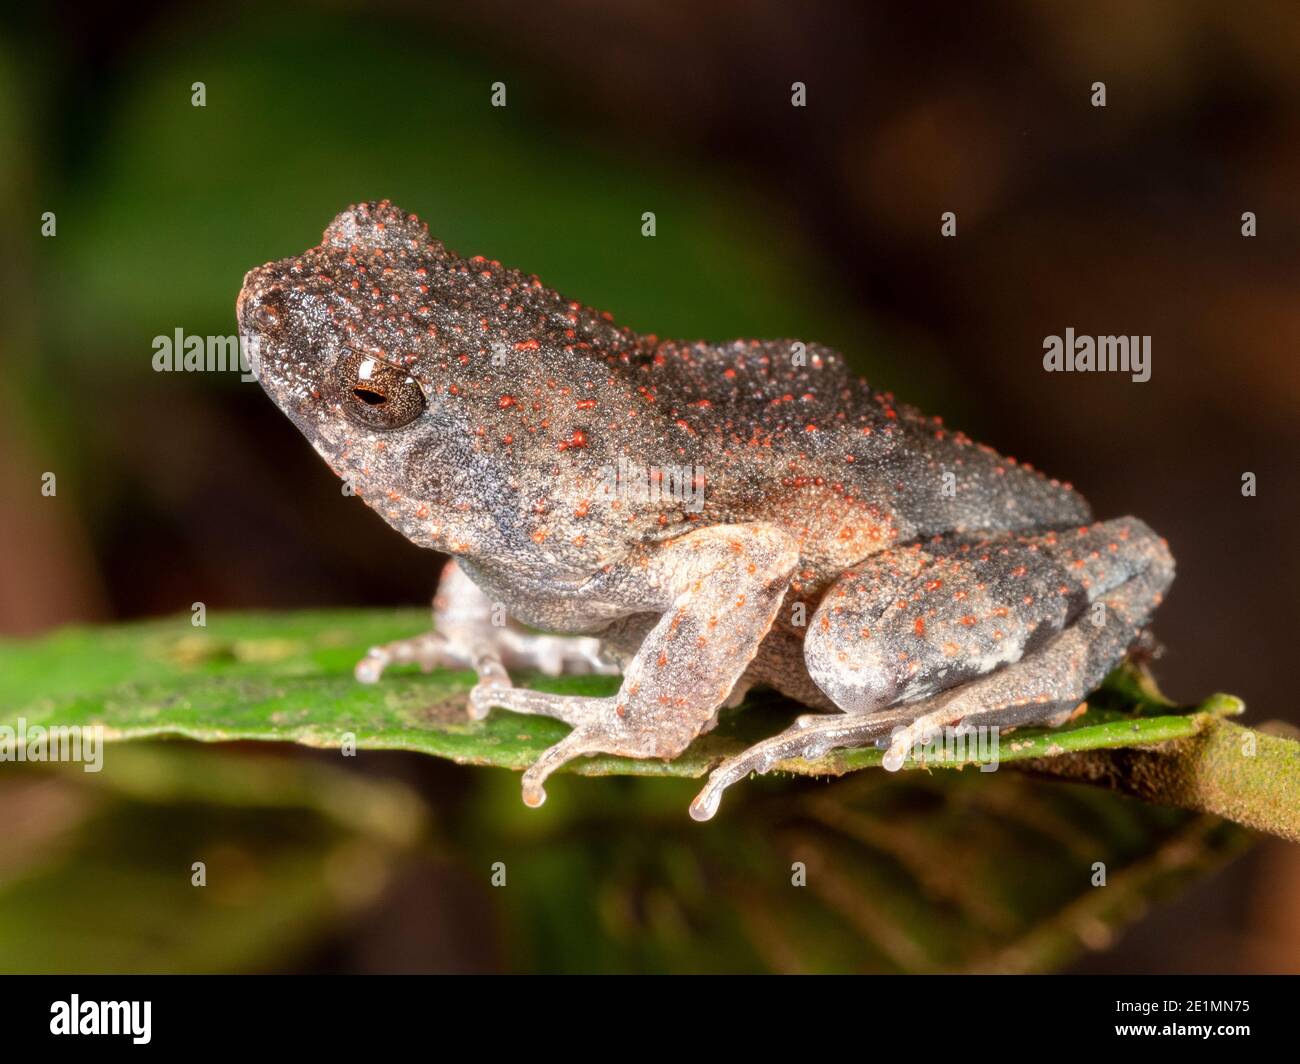 Peters' Dwarf Frog (Engystomops petersi) in rainforest in the Ecuadorian Amazon. Stock Photo